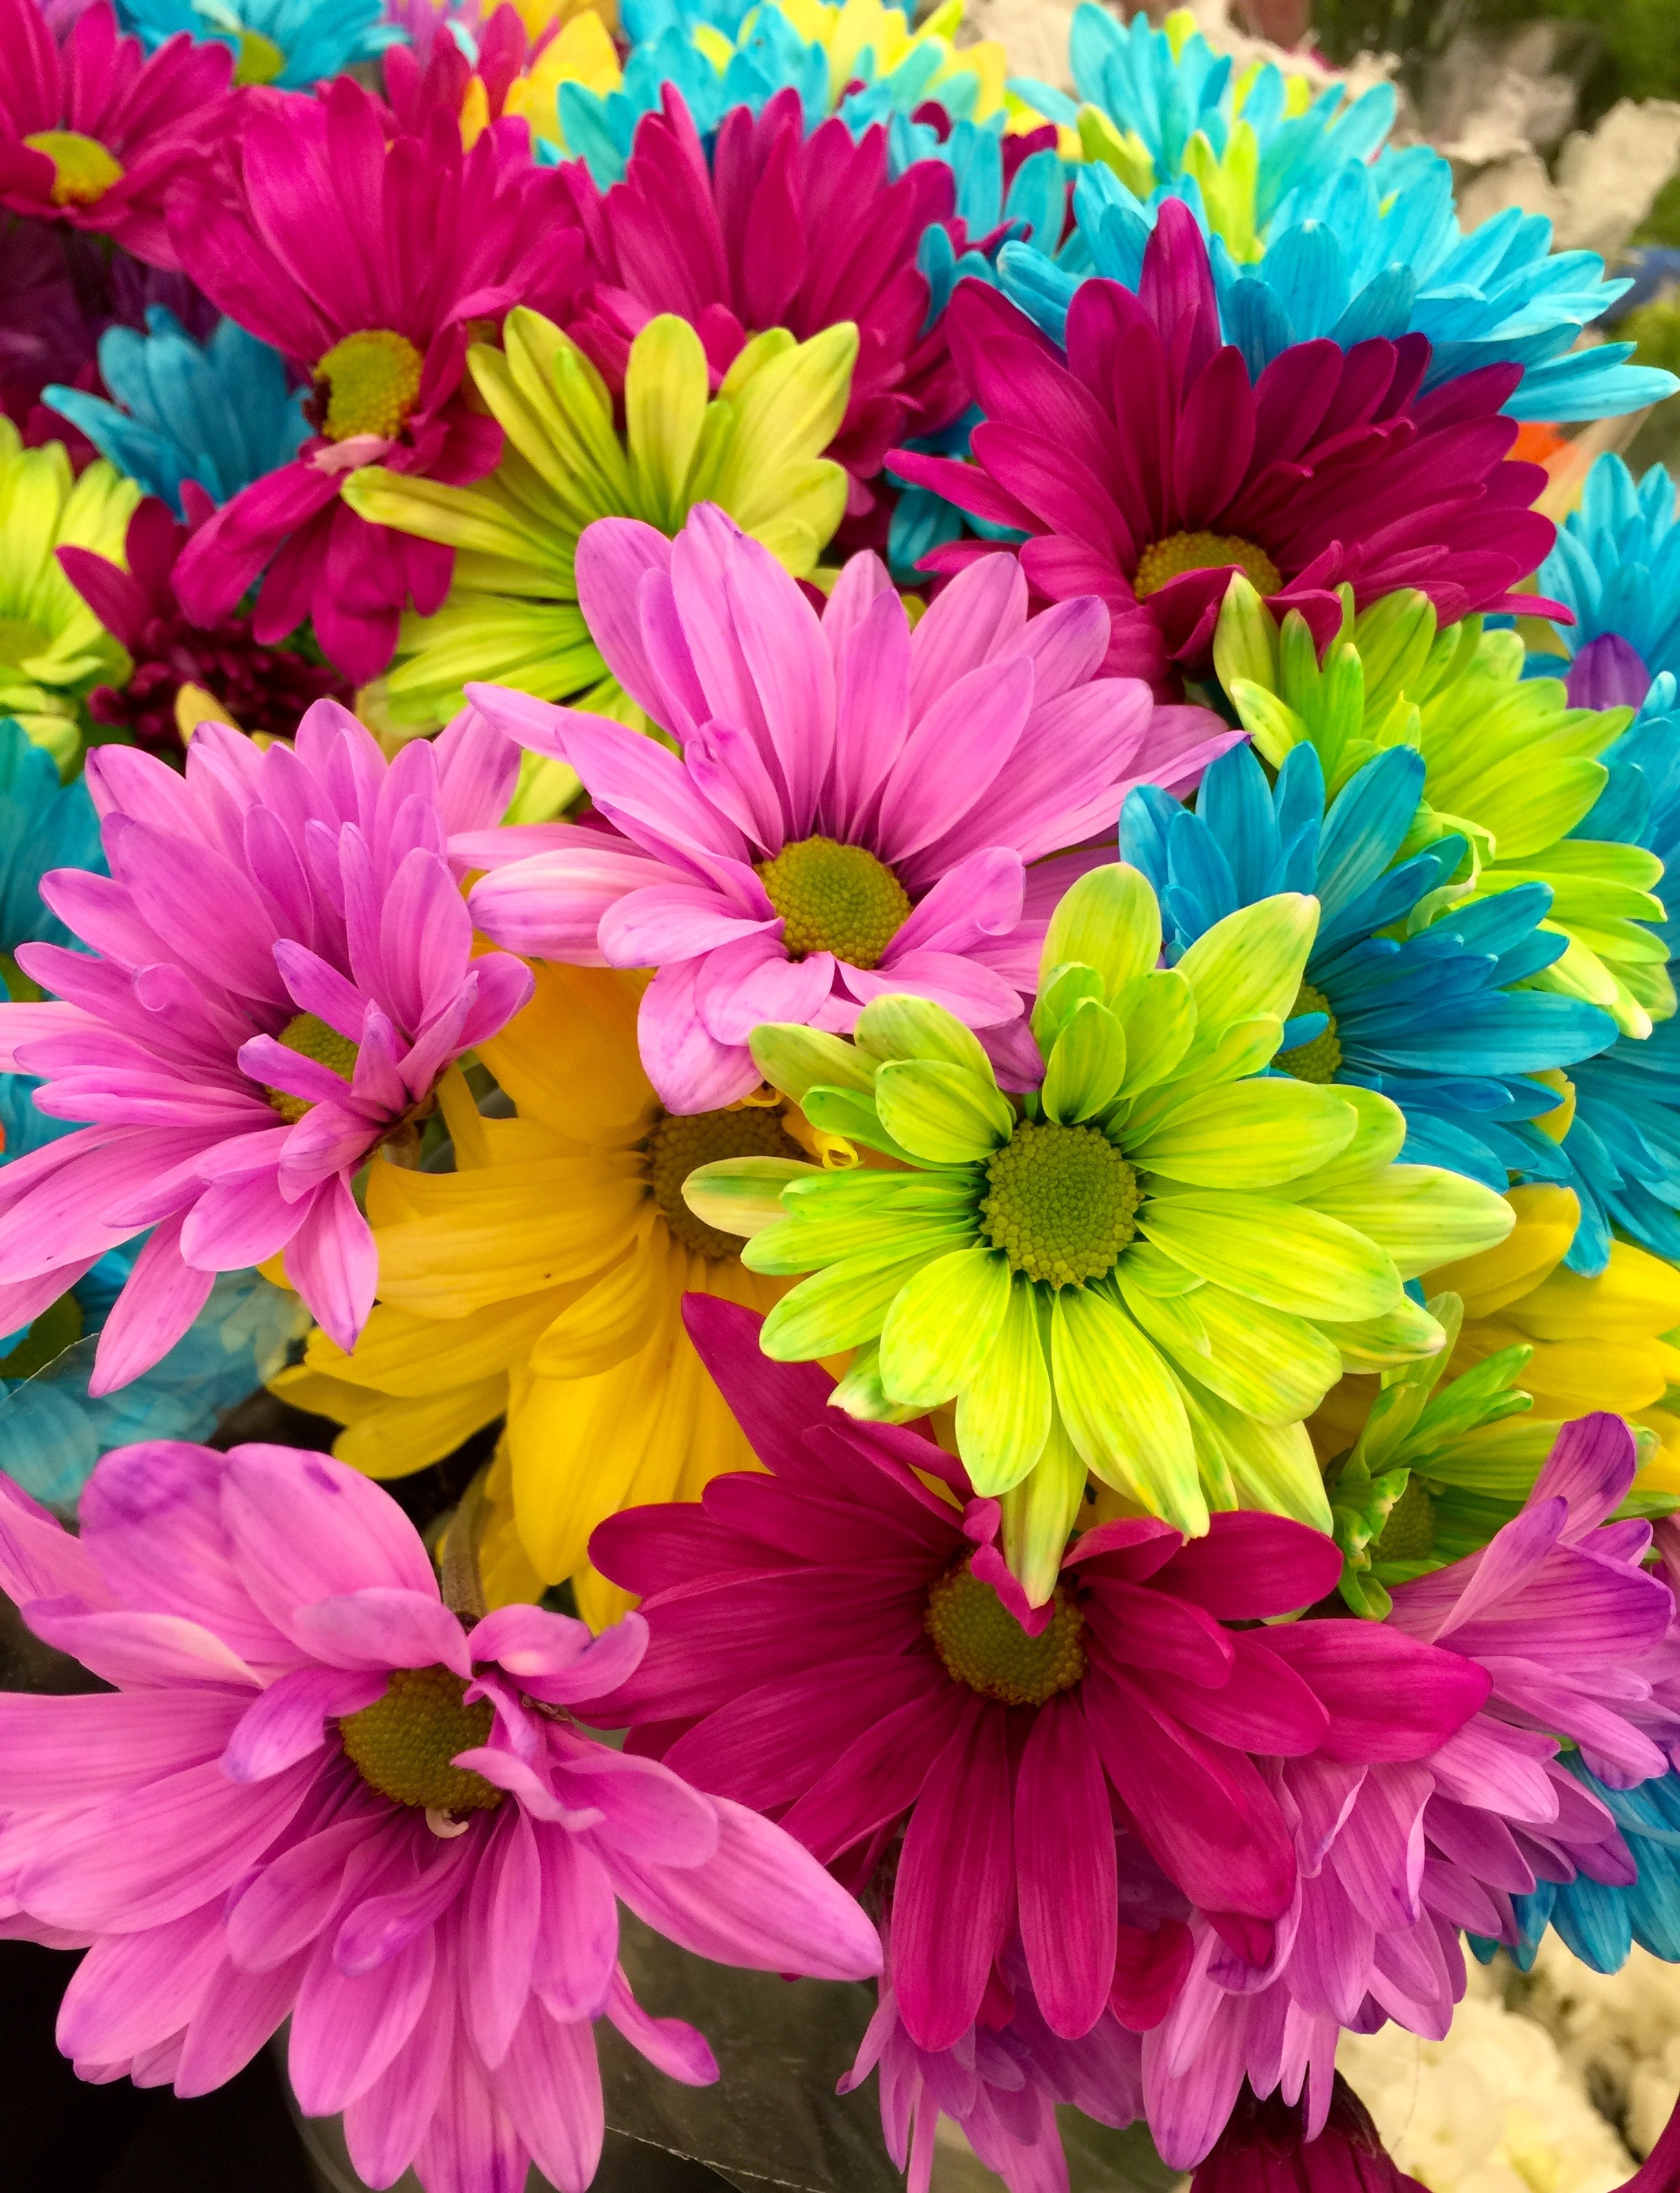 1000+ Beautiful Bunch Of Flowers Photos · Pexels · Free Stock Photos